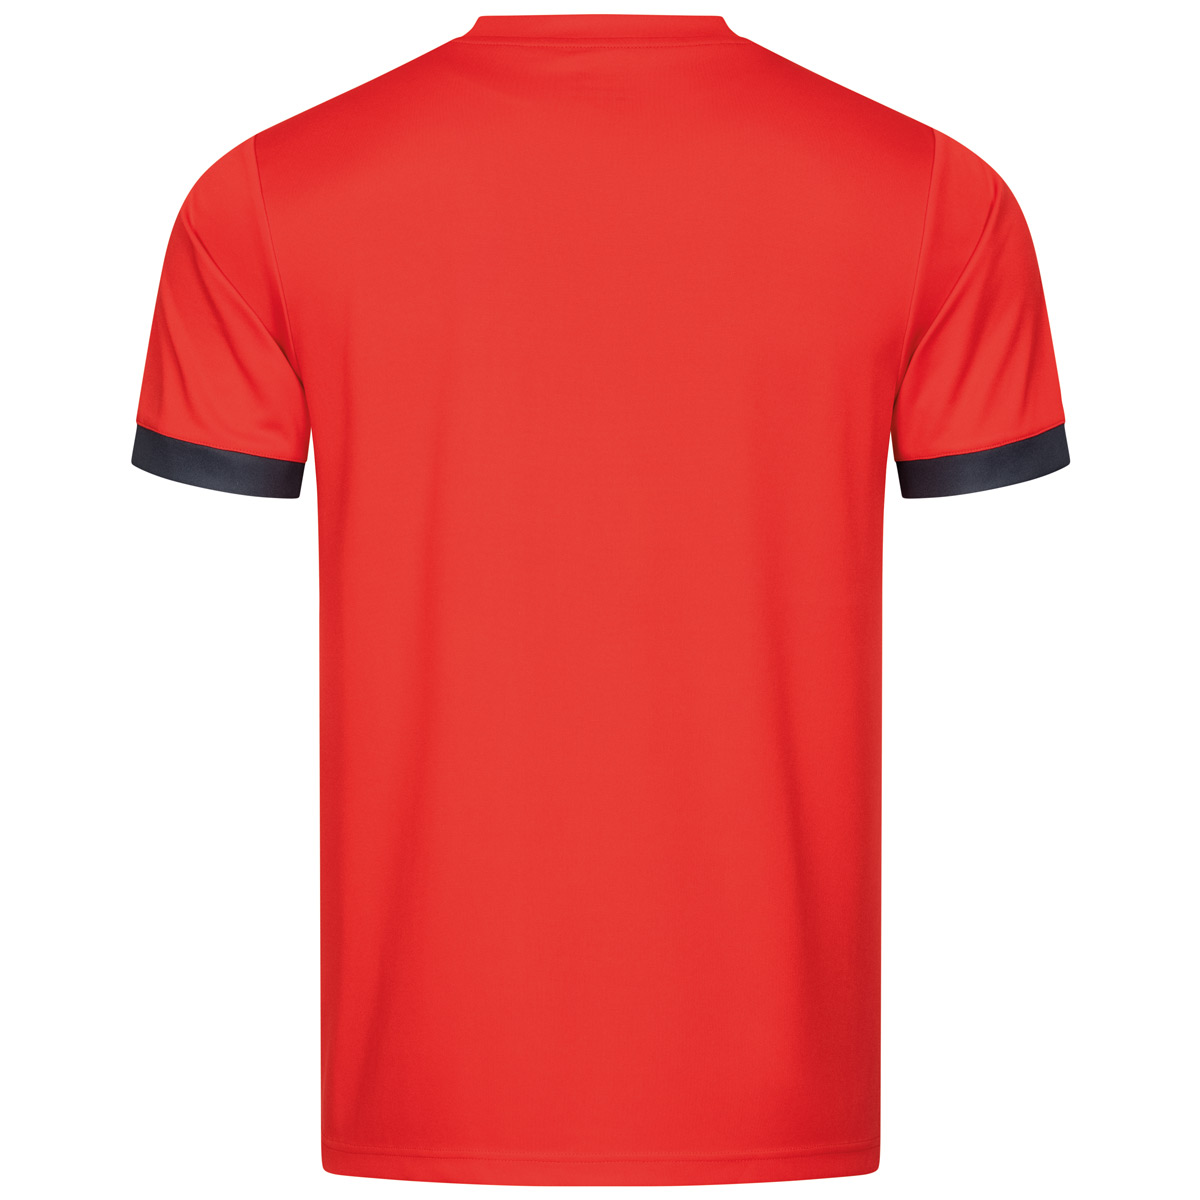 Donic T-Shirt Nova red/black S